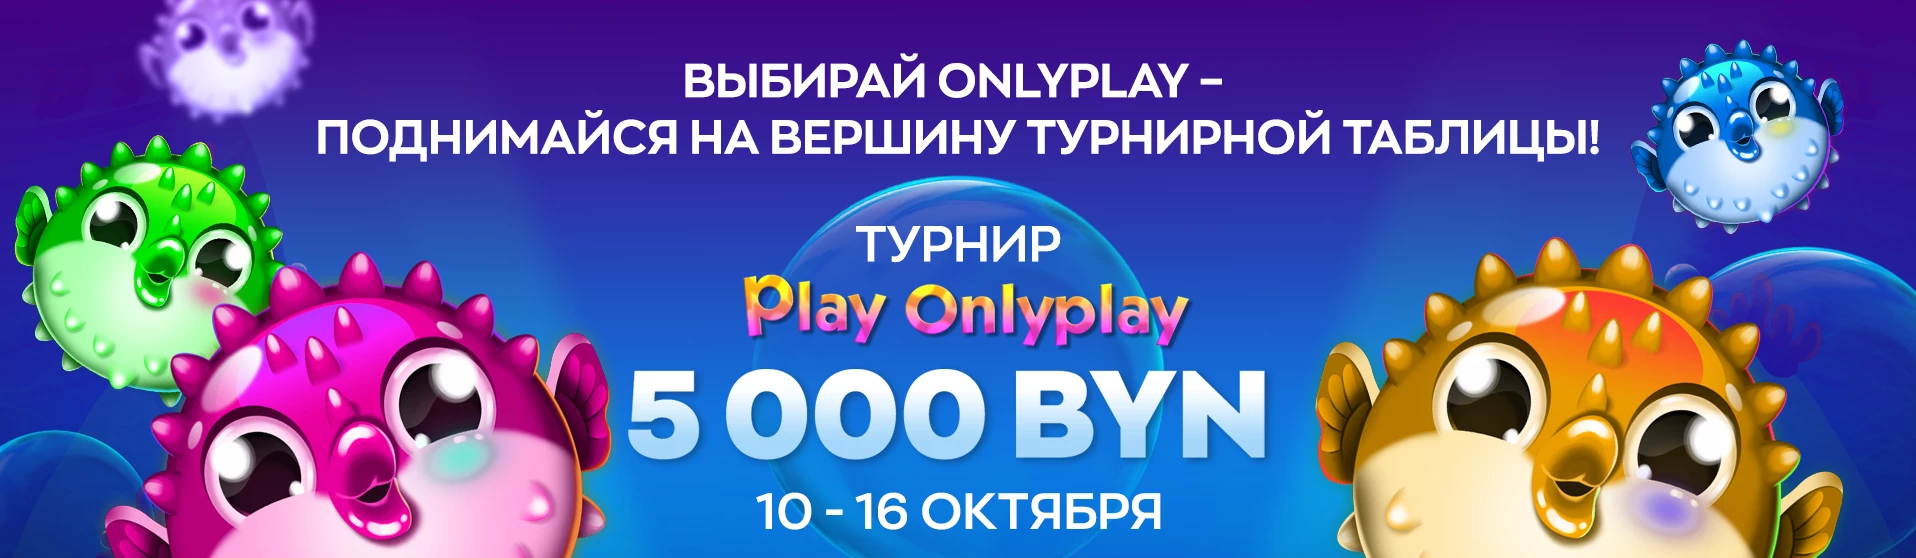 Обкатай новичка – подними долю от 5000 BYN в турнире с провайдером ONLYPLAY!